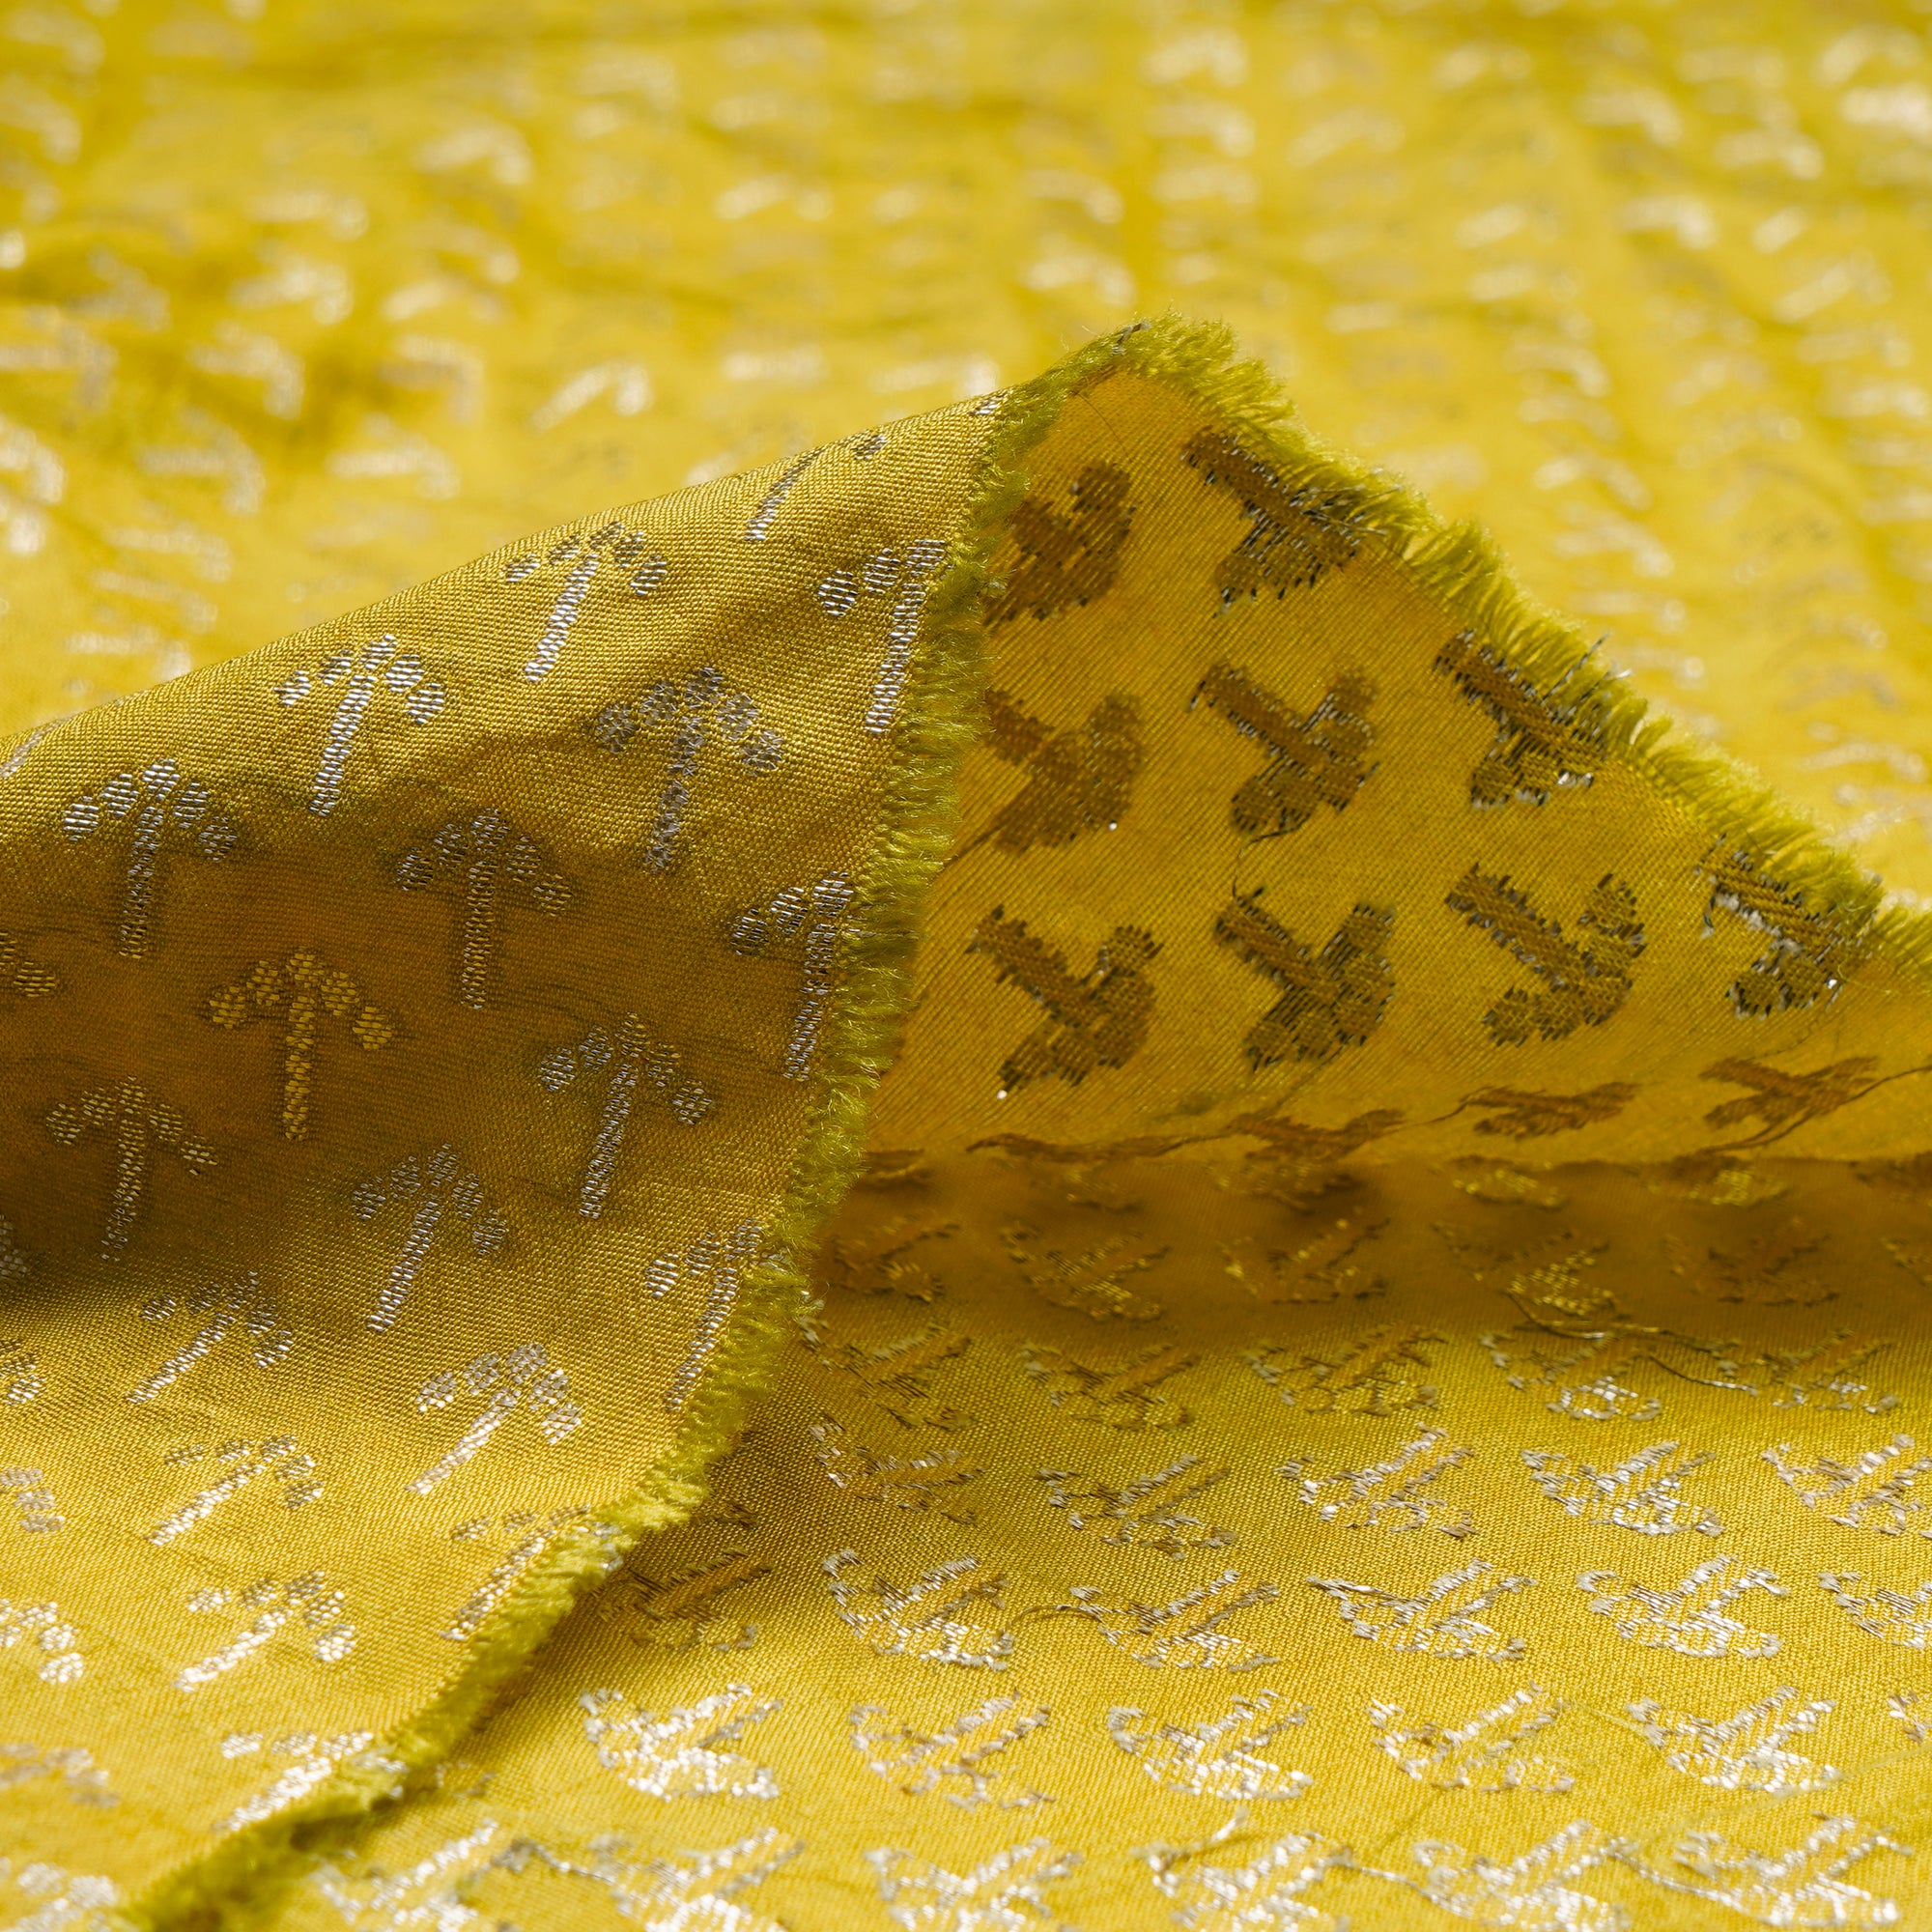 Hot Spot All Over Pattern Blended Banarasi Brocade Fabric